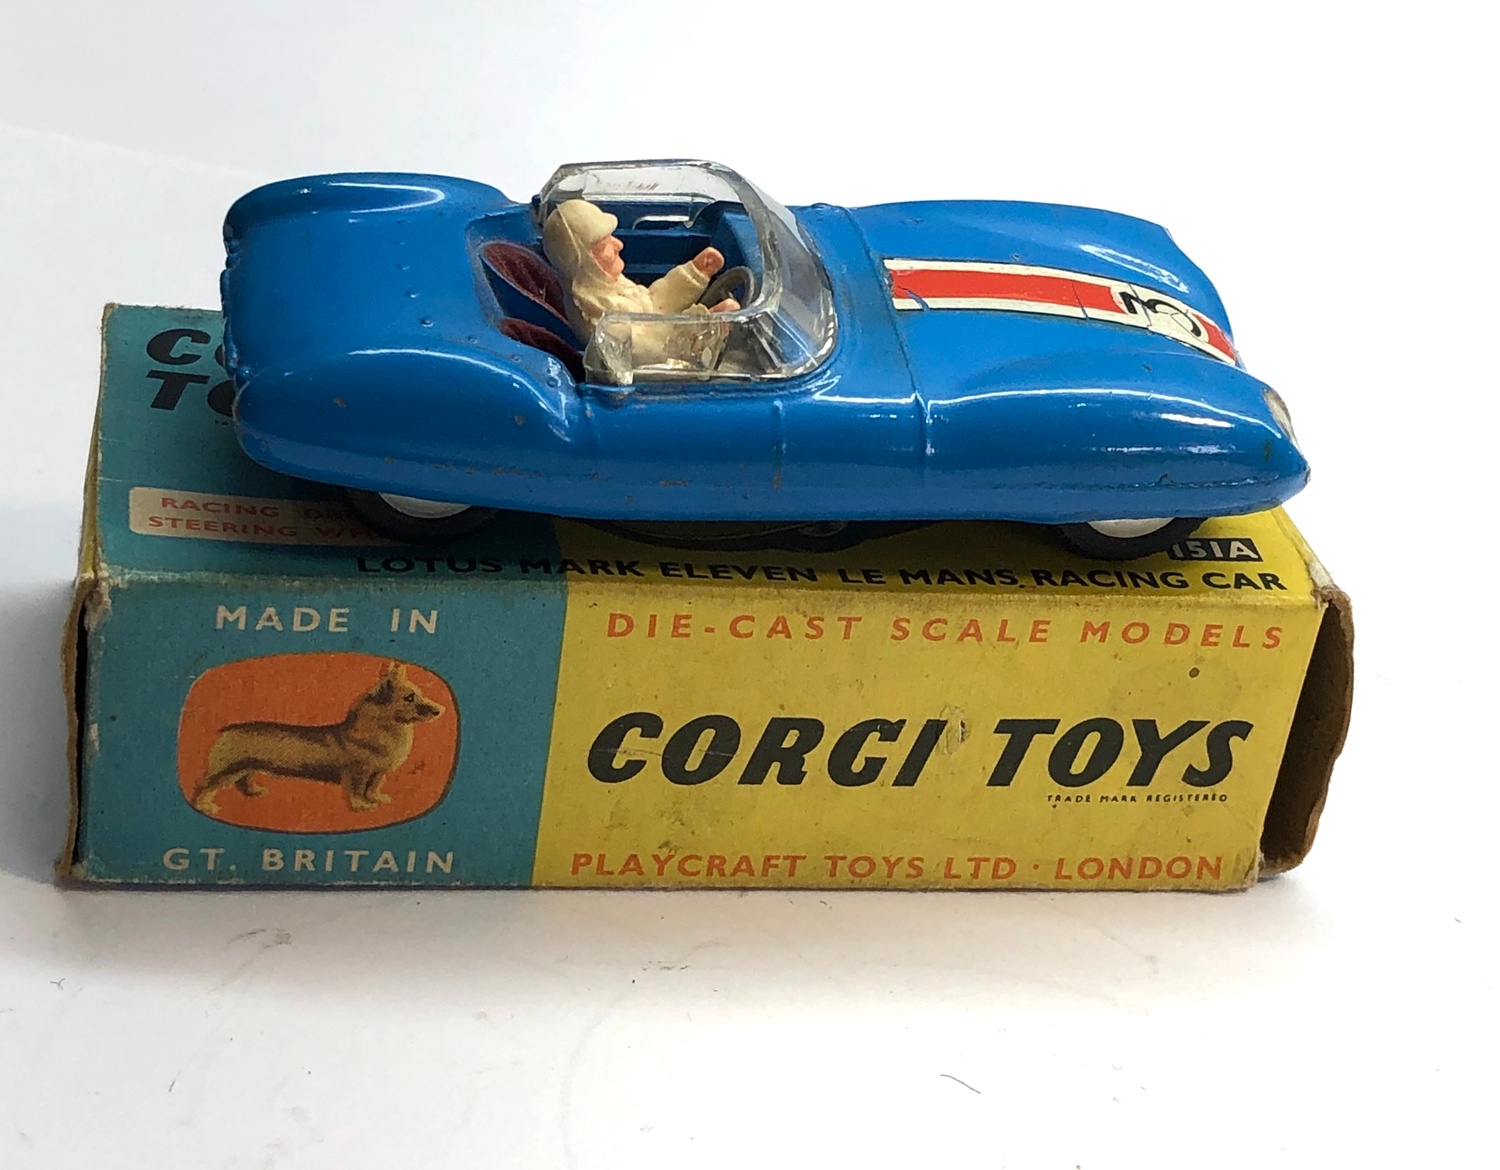 Original boxed corgi 151a lotus mark eleven le mans racing car as shown condition - Image 2 of 5